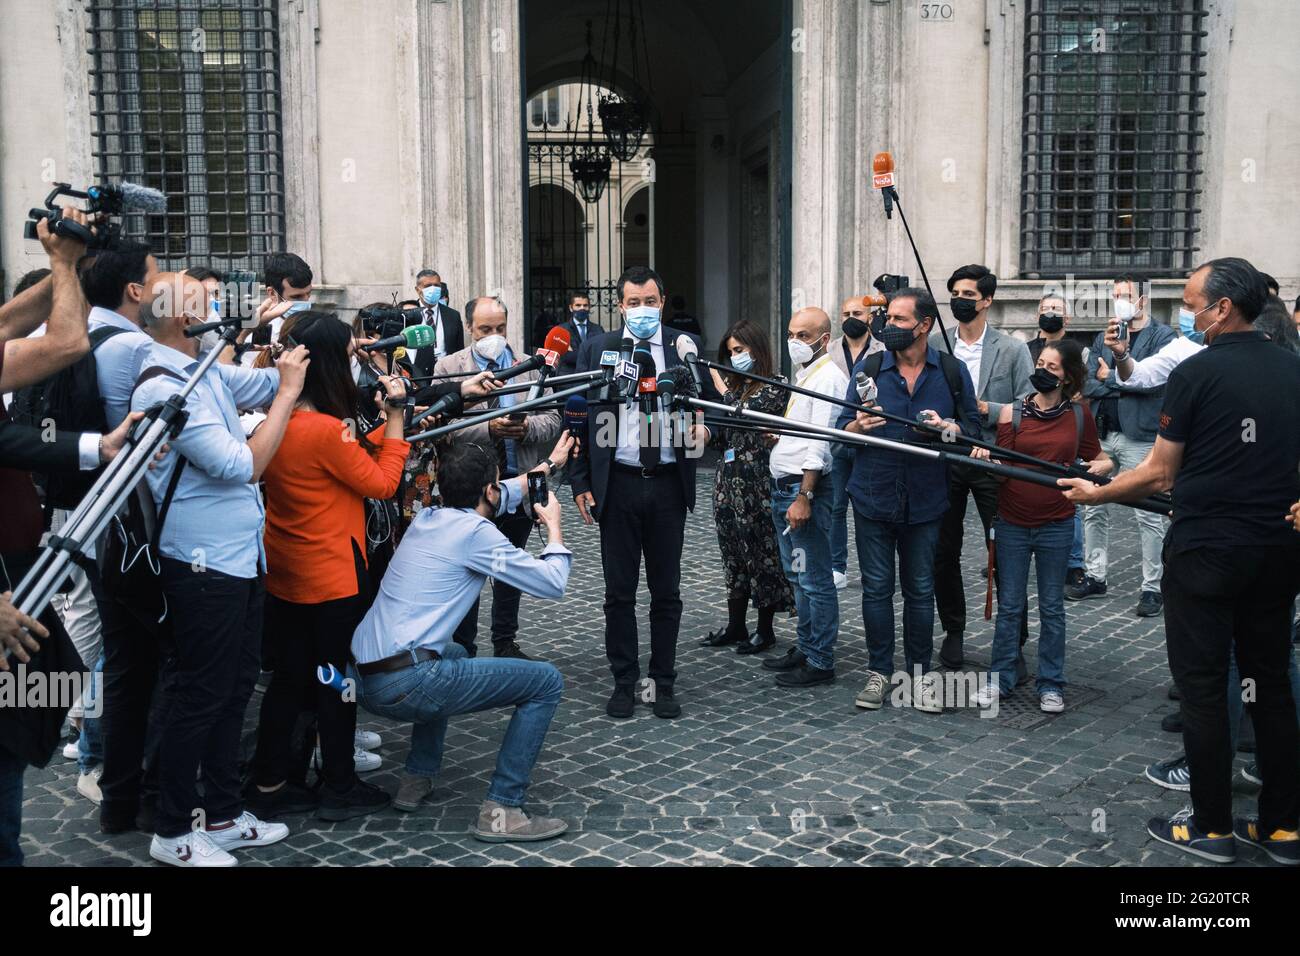 ROMA, ITALIA - 07 DE JUNIO DE 2021. El líder de la Lega Matteo Salvini habla con periodistas fuera del Palazzo Chigi. Crédito: Andrea Petinari / Medialys Images/Alamy Live News Foto de stock